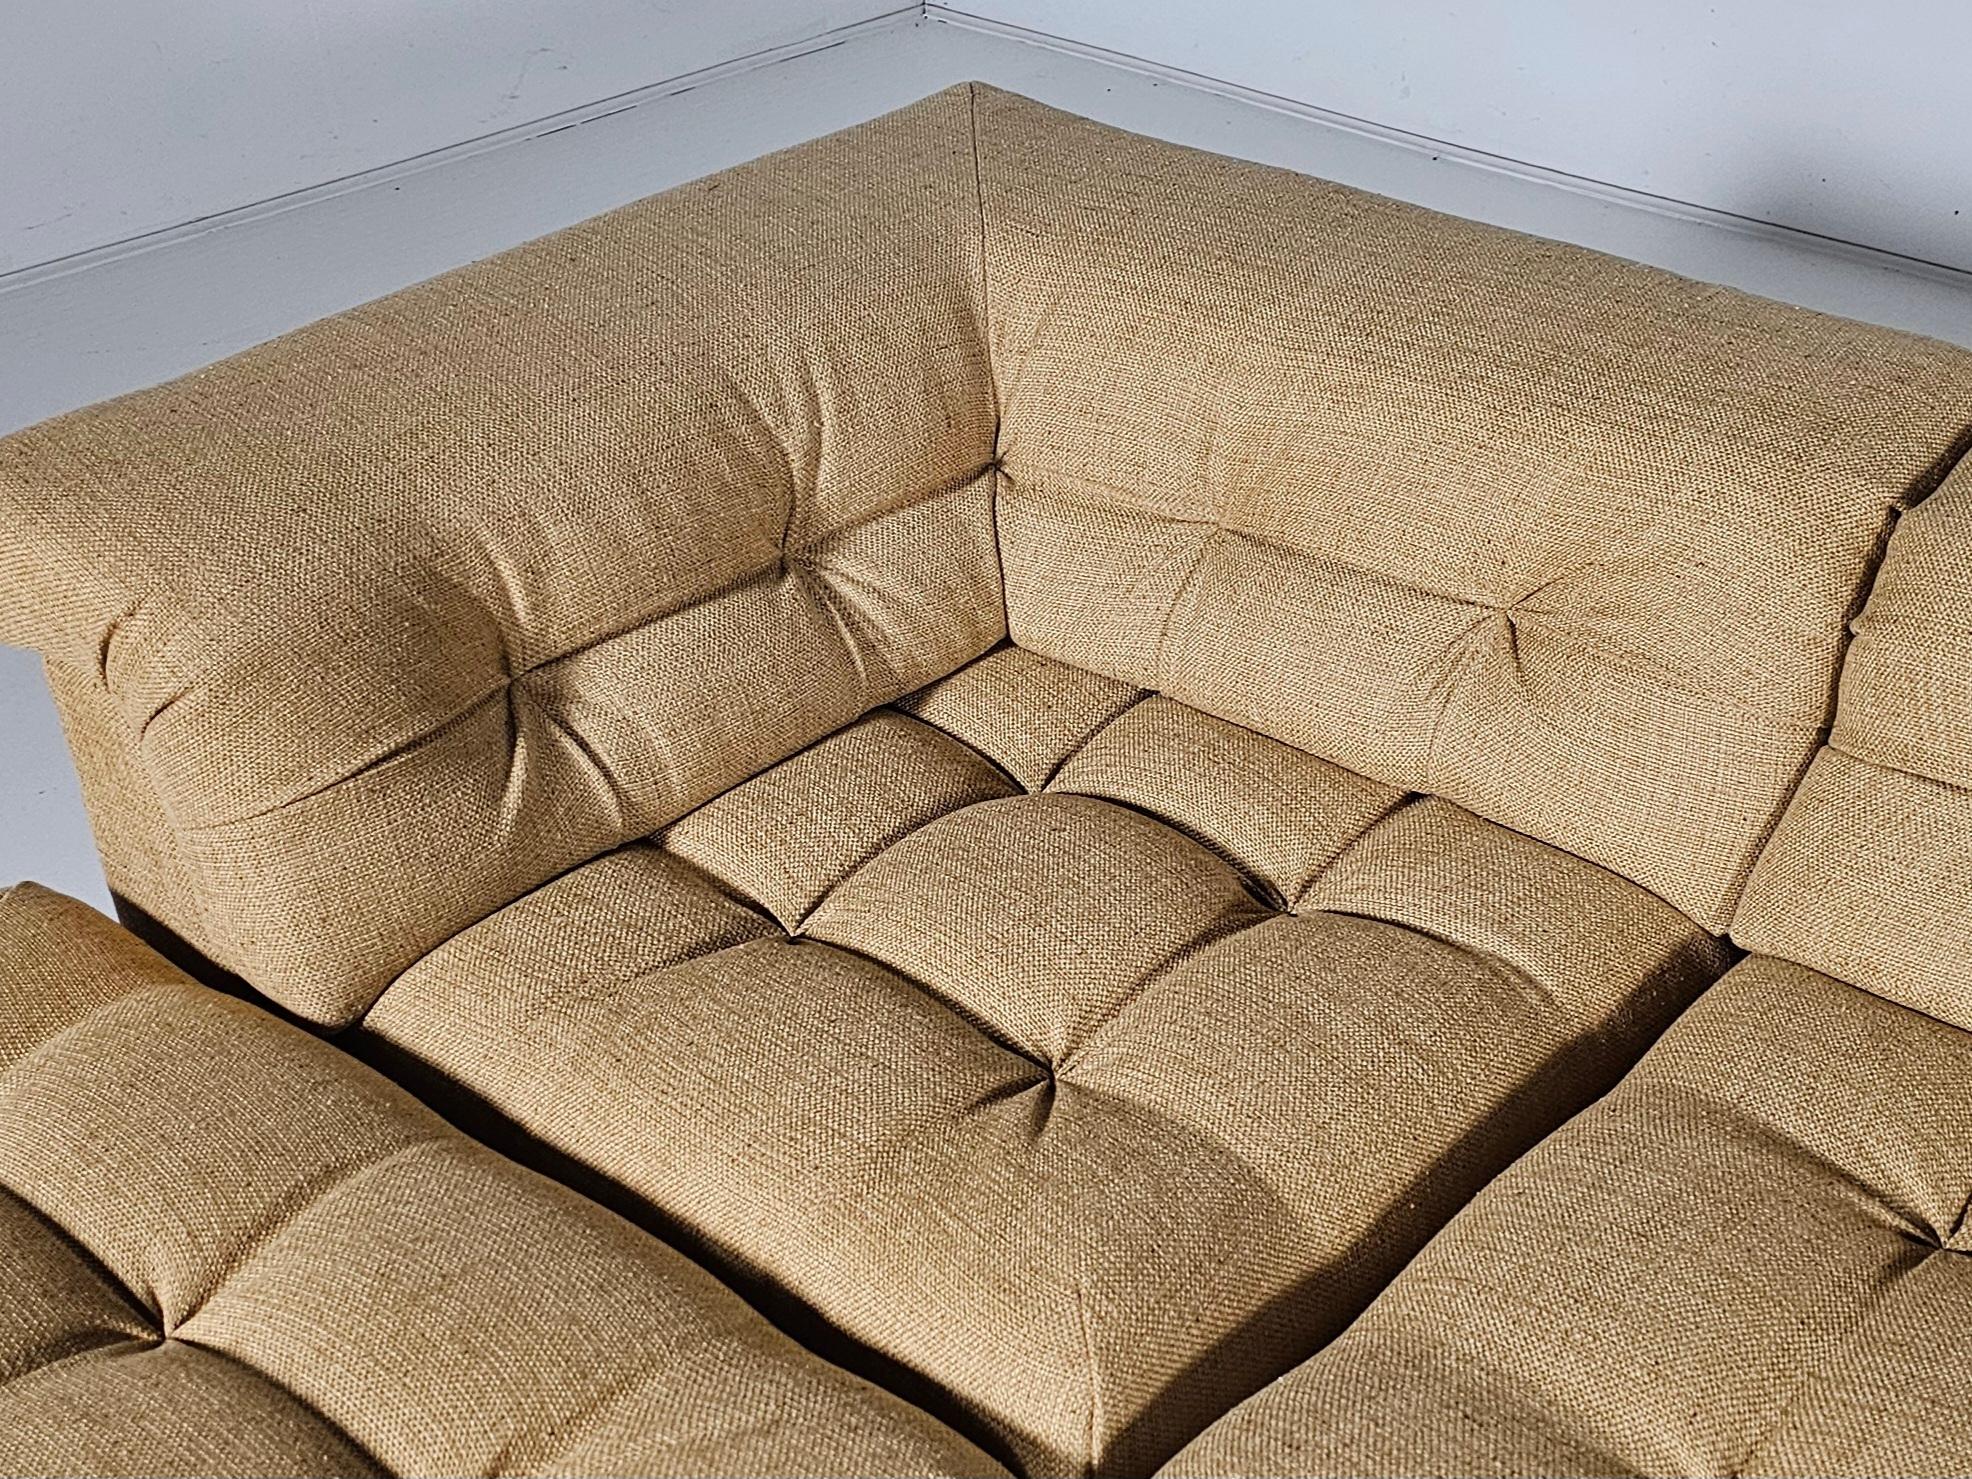 Mah Jong sofa in beige/sand fabric by Hans Hopfer, Roche Bobois, France, 1970s For Sale 5